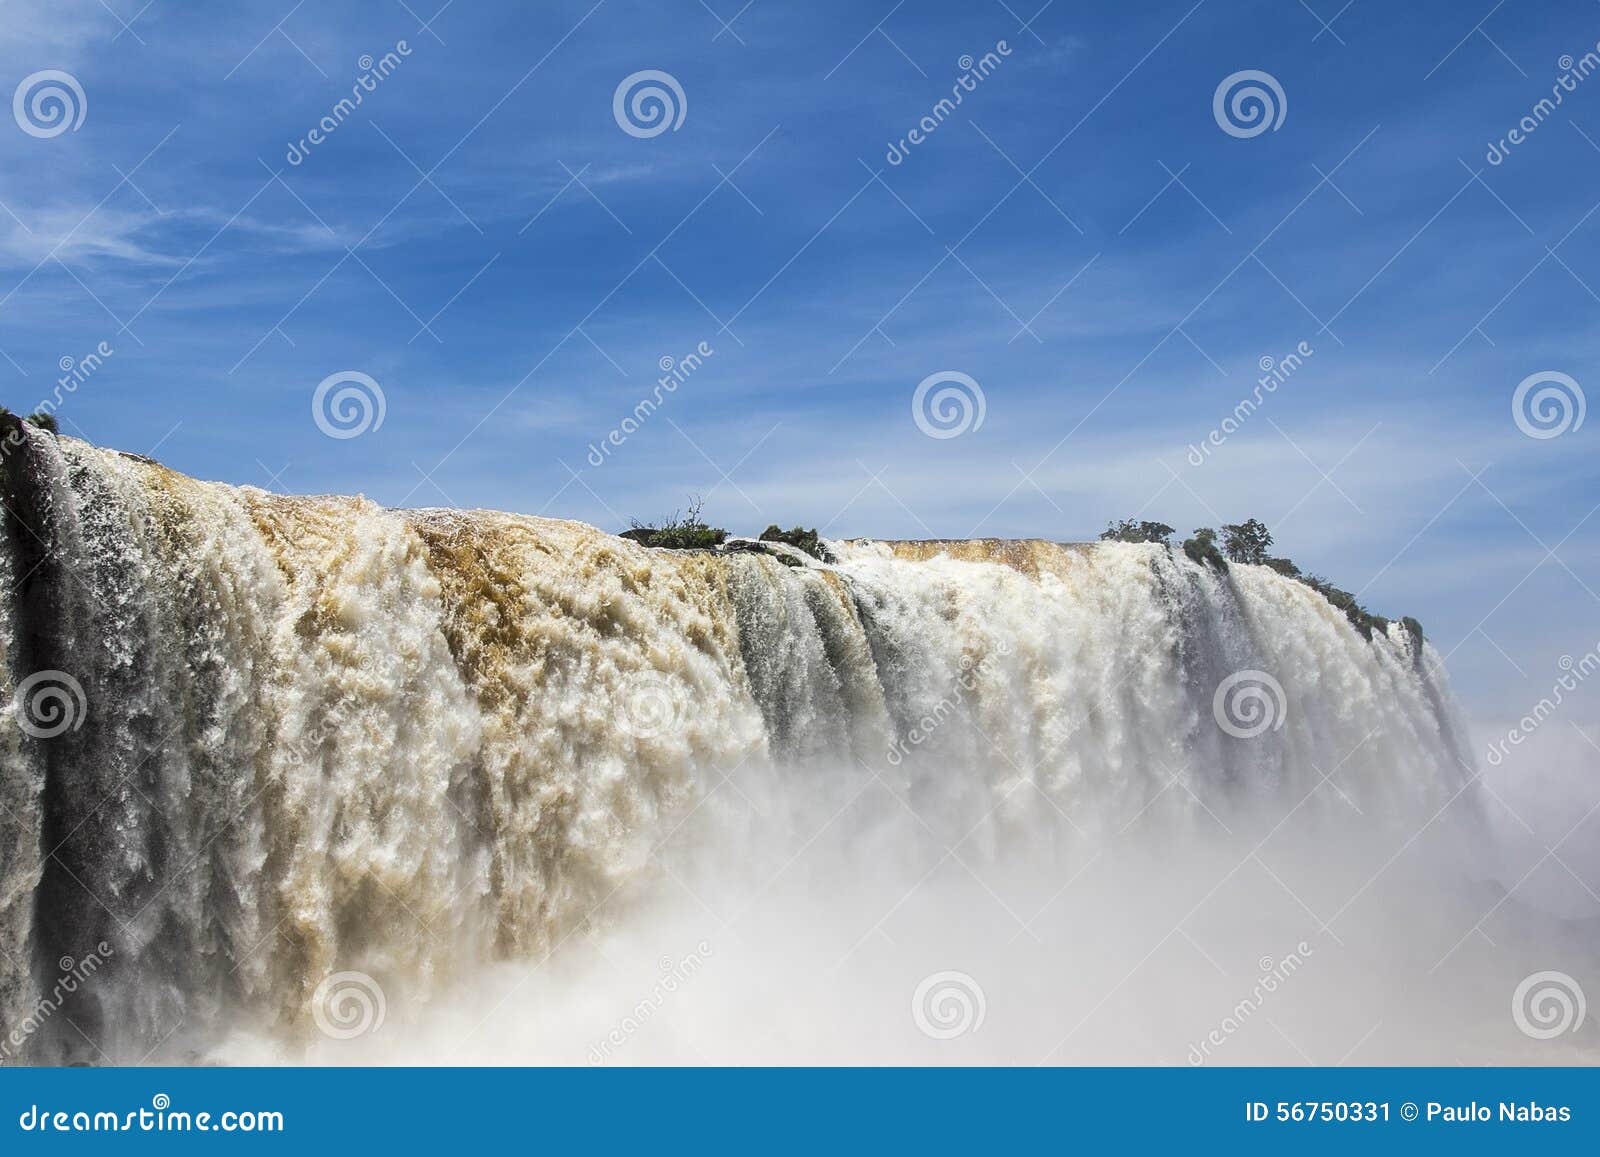 iguacu (iguazu) falls on a border of brazil and argentina